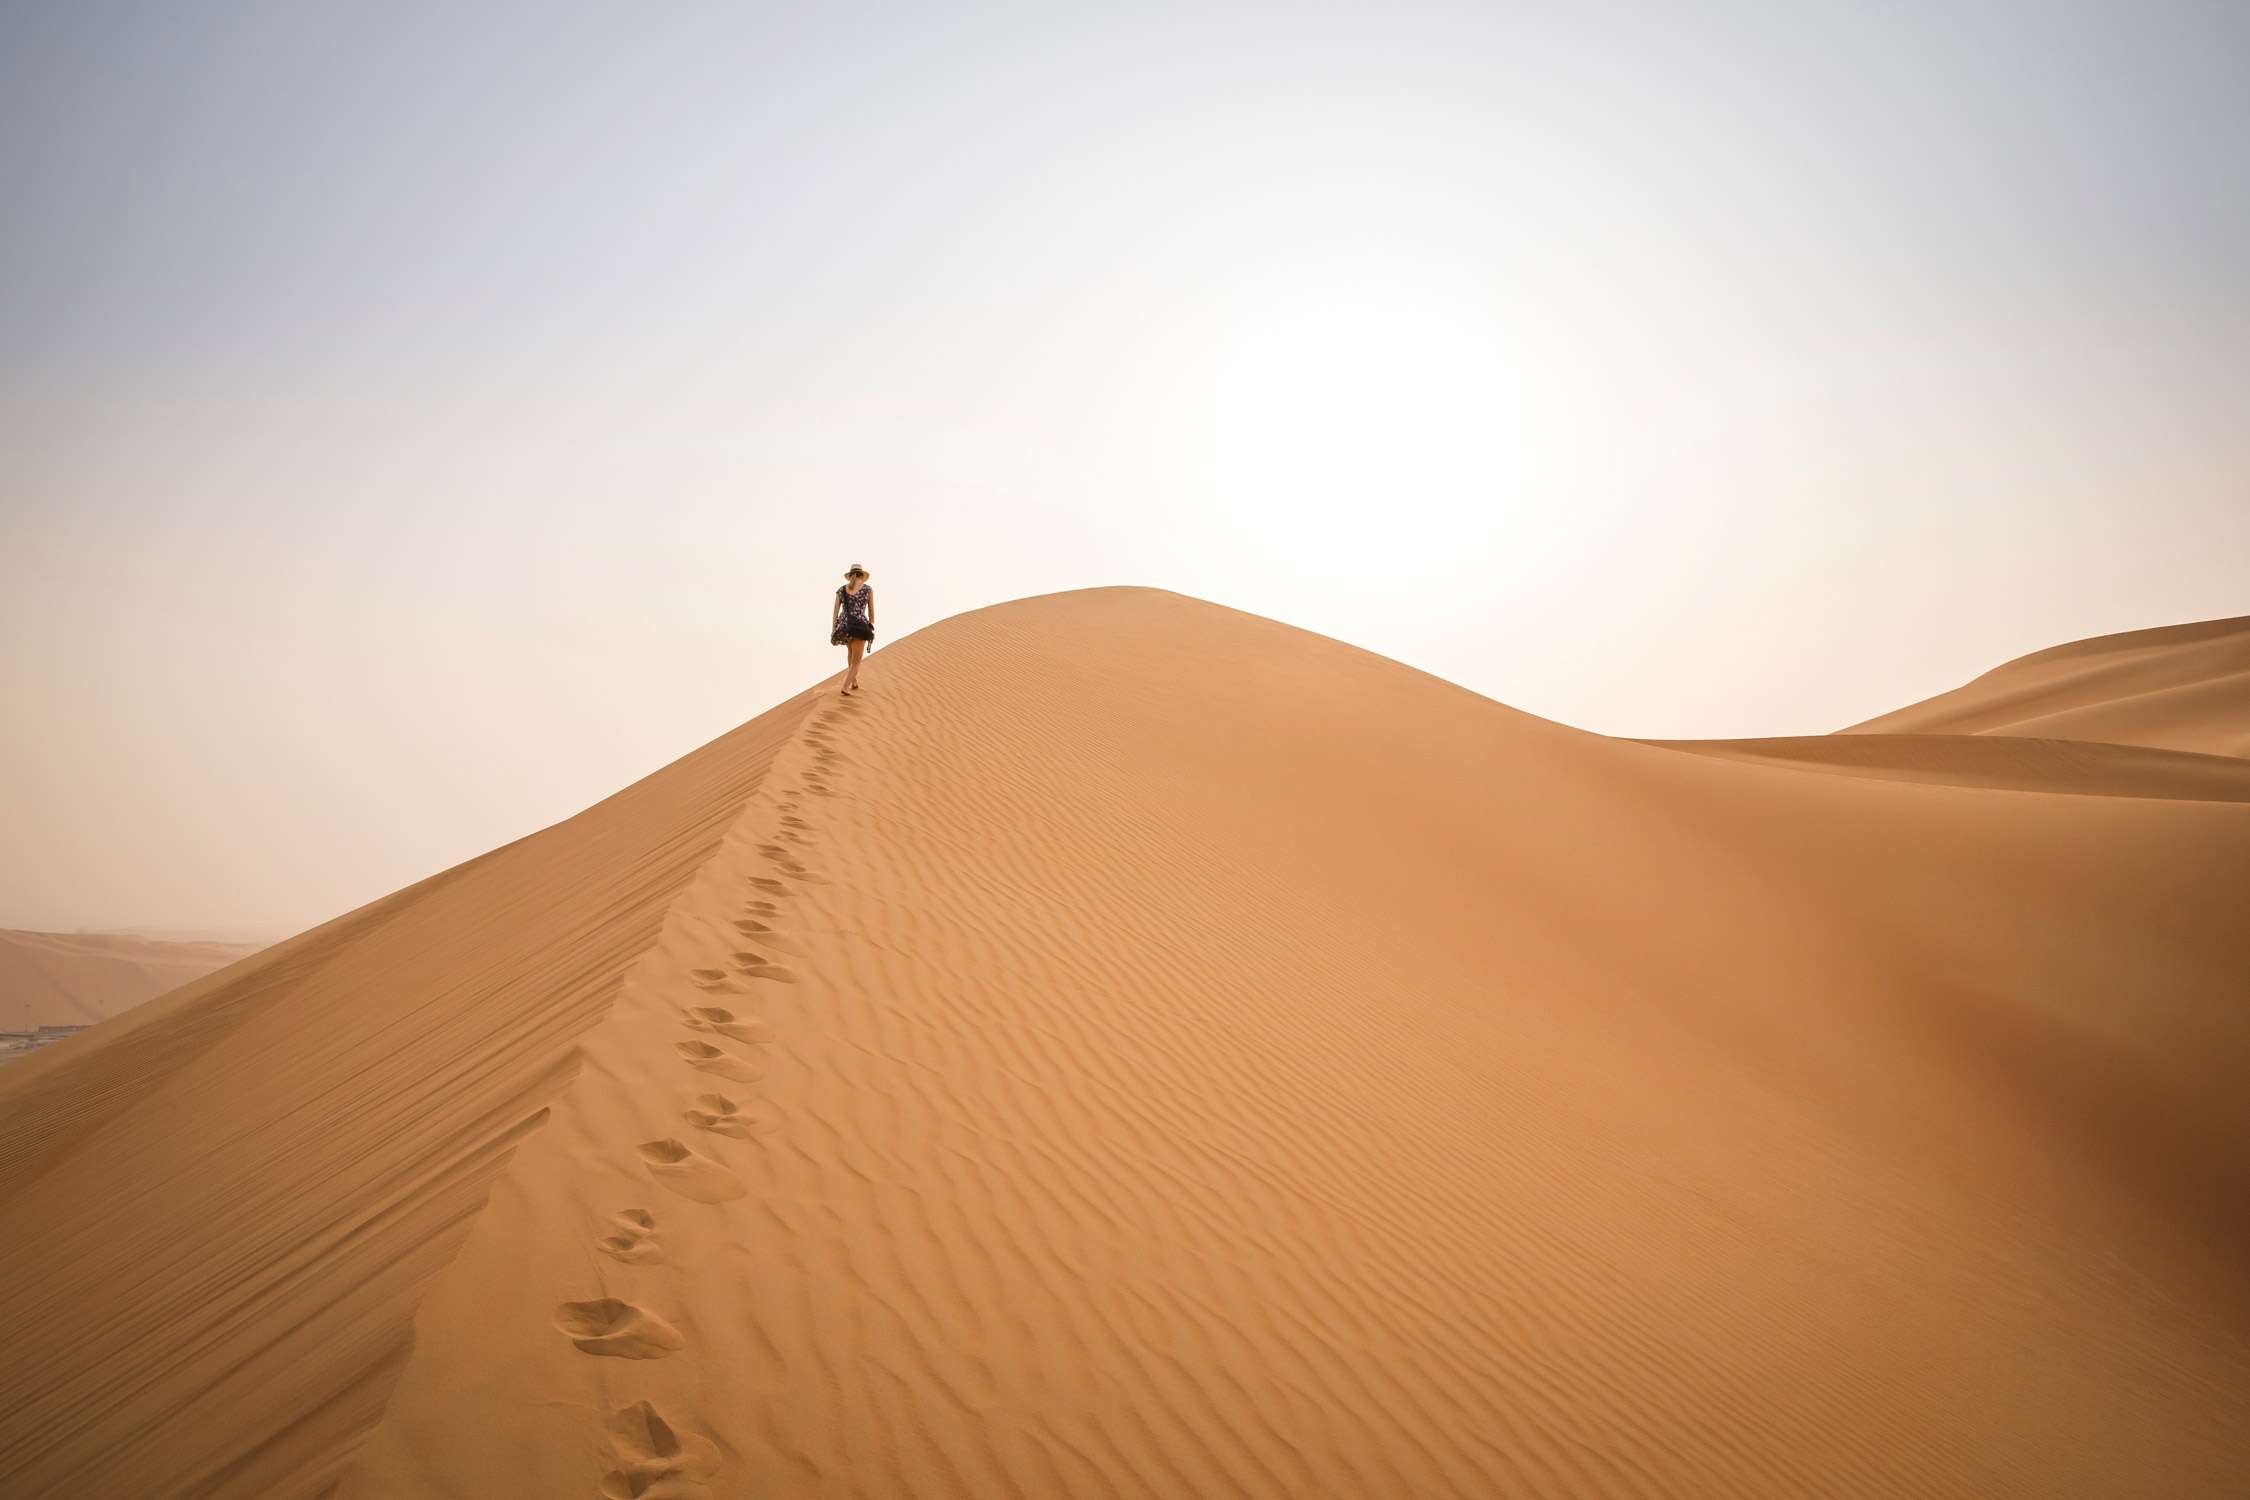 Figure walking up a sand dune in Rub al Khali Desert at the Empty Quarter, in Abu Dhabi